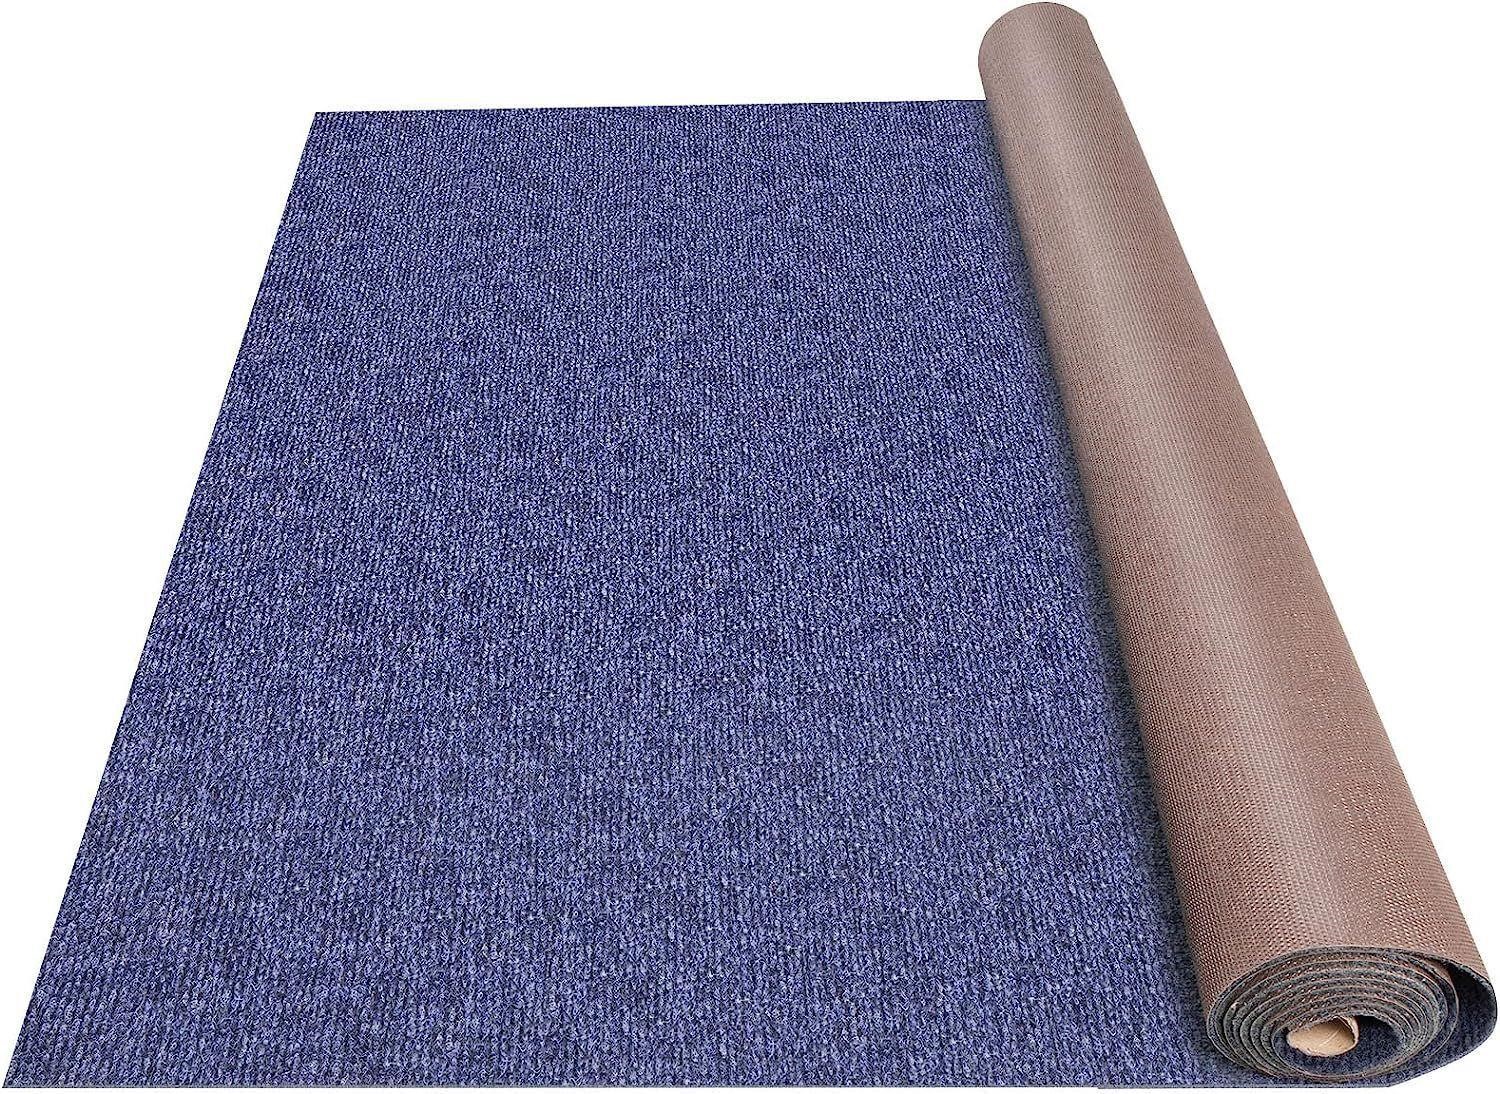 Blue Marine Carpet 6 ft x 29.5 ft Marine Grade